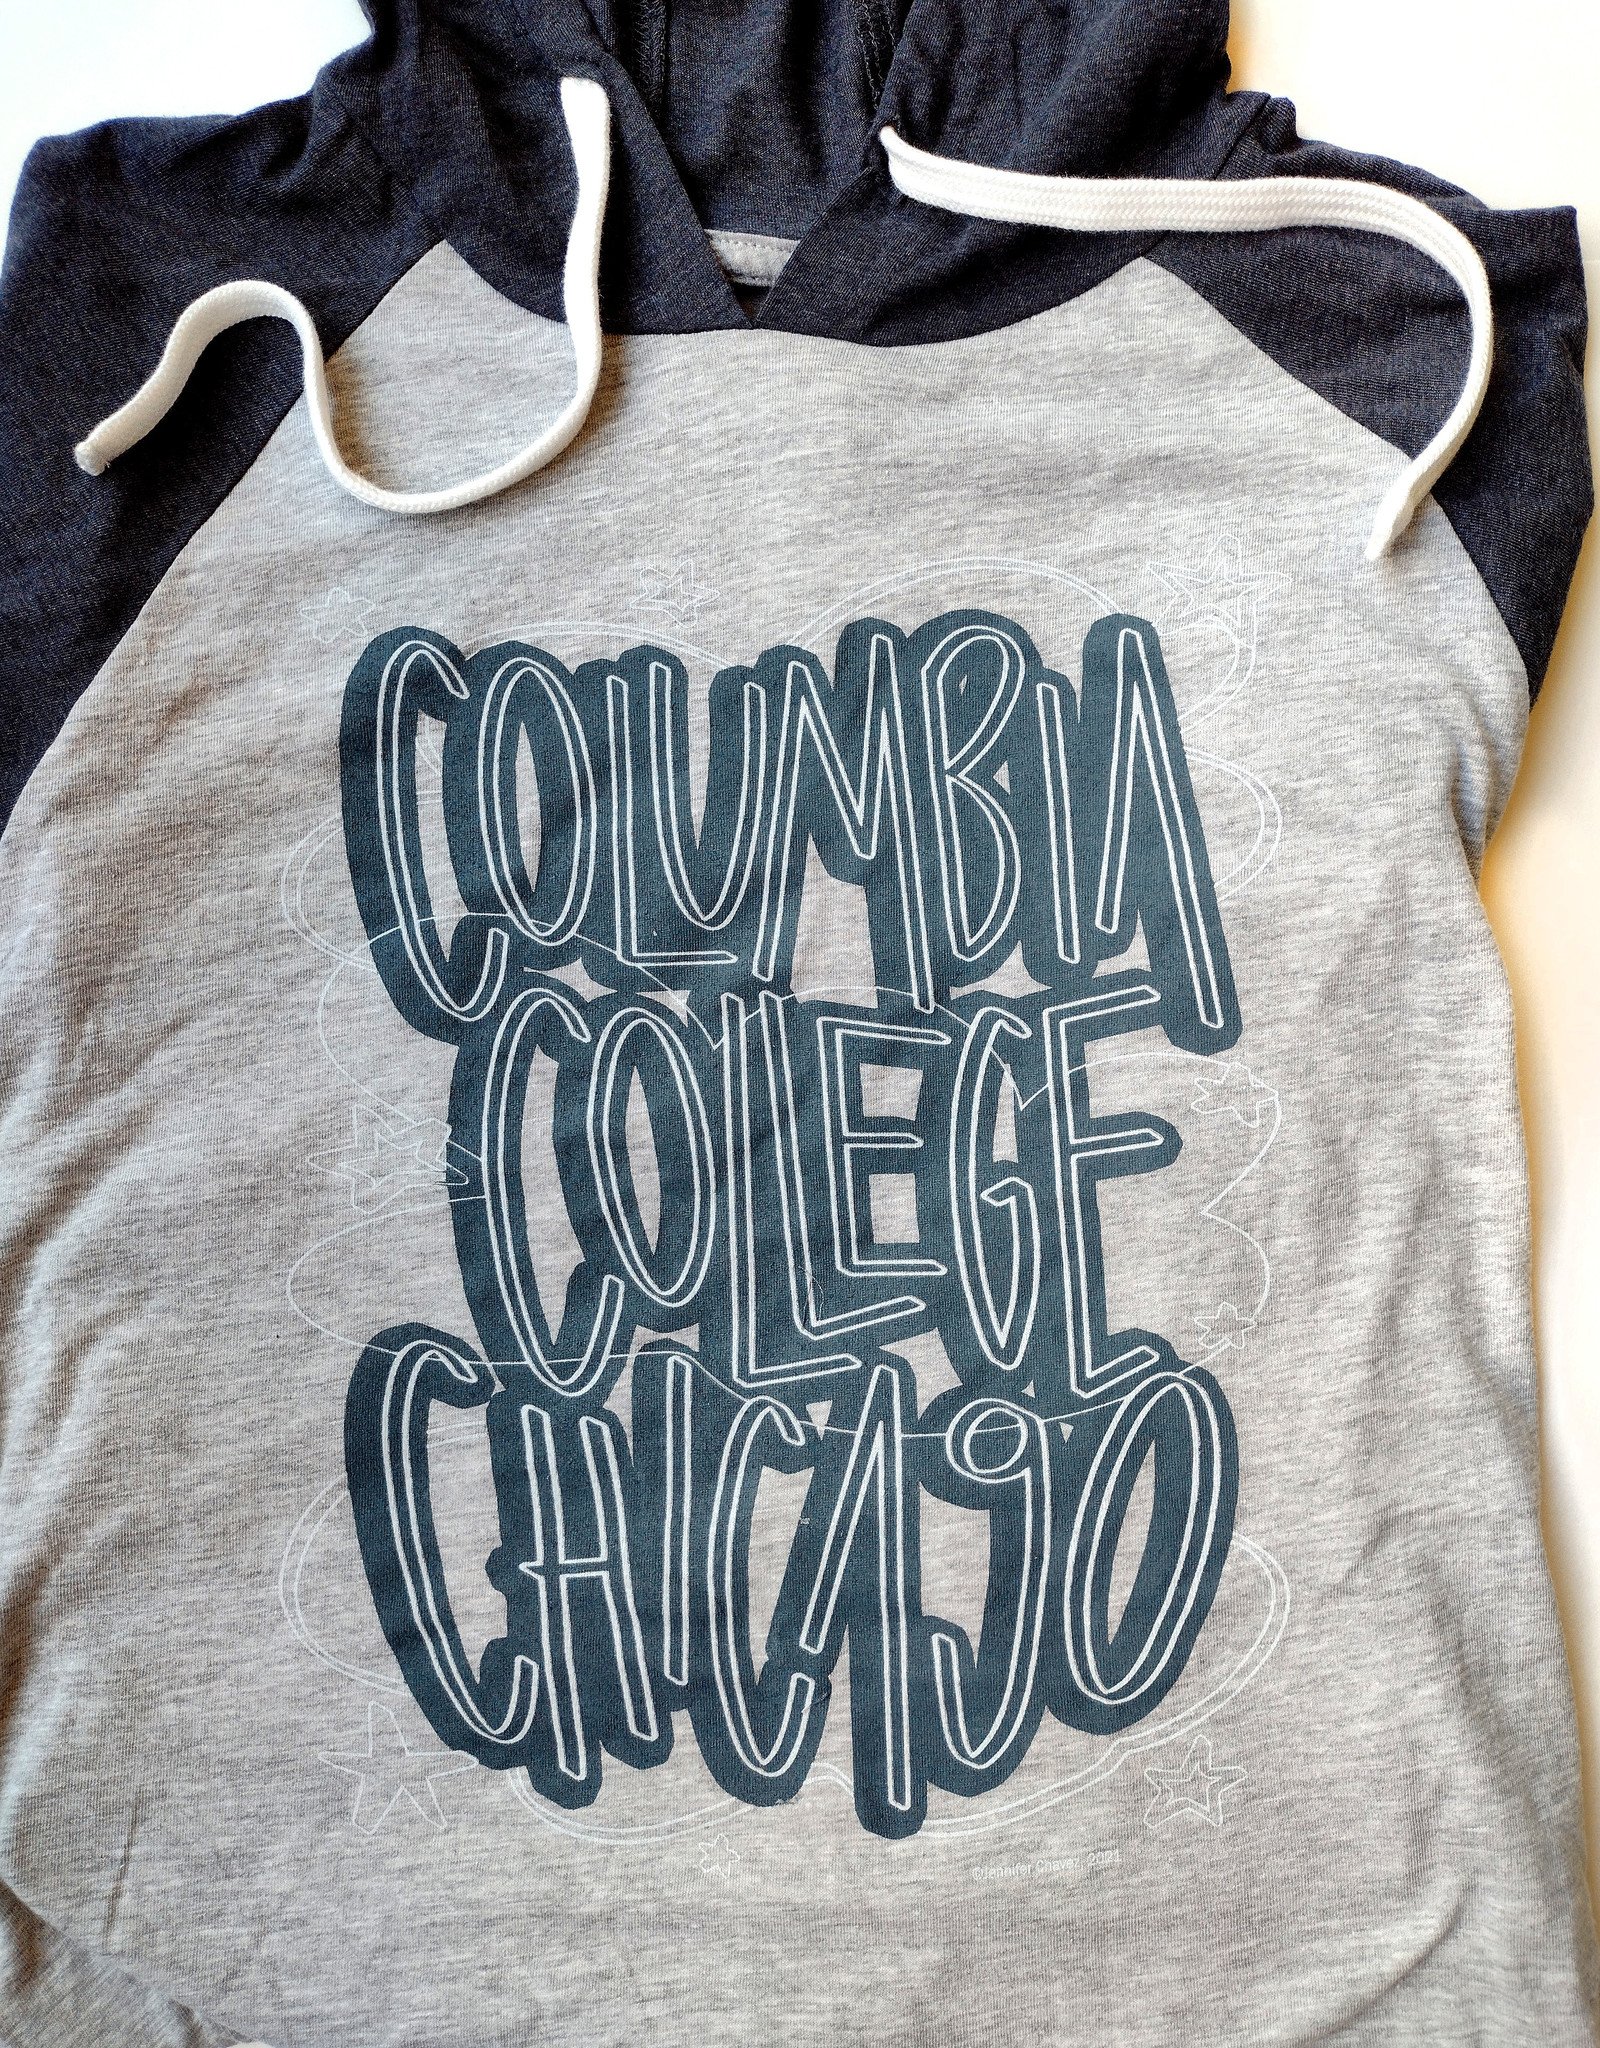 Buy Columbia, By Columbia Hooded Raglan Columbia T-Shirt